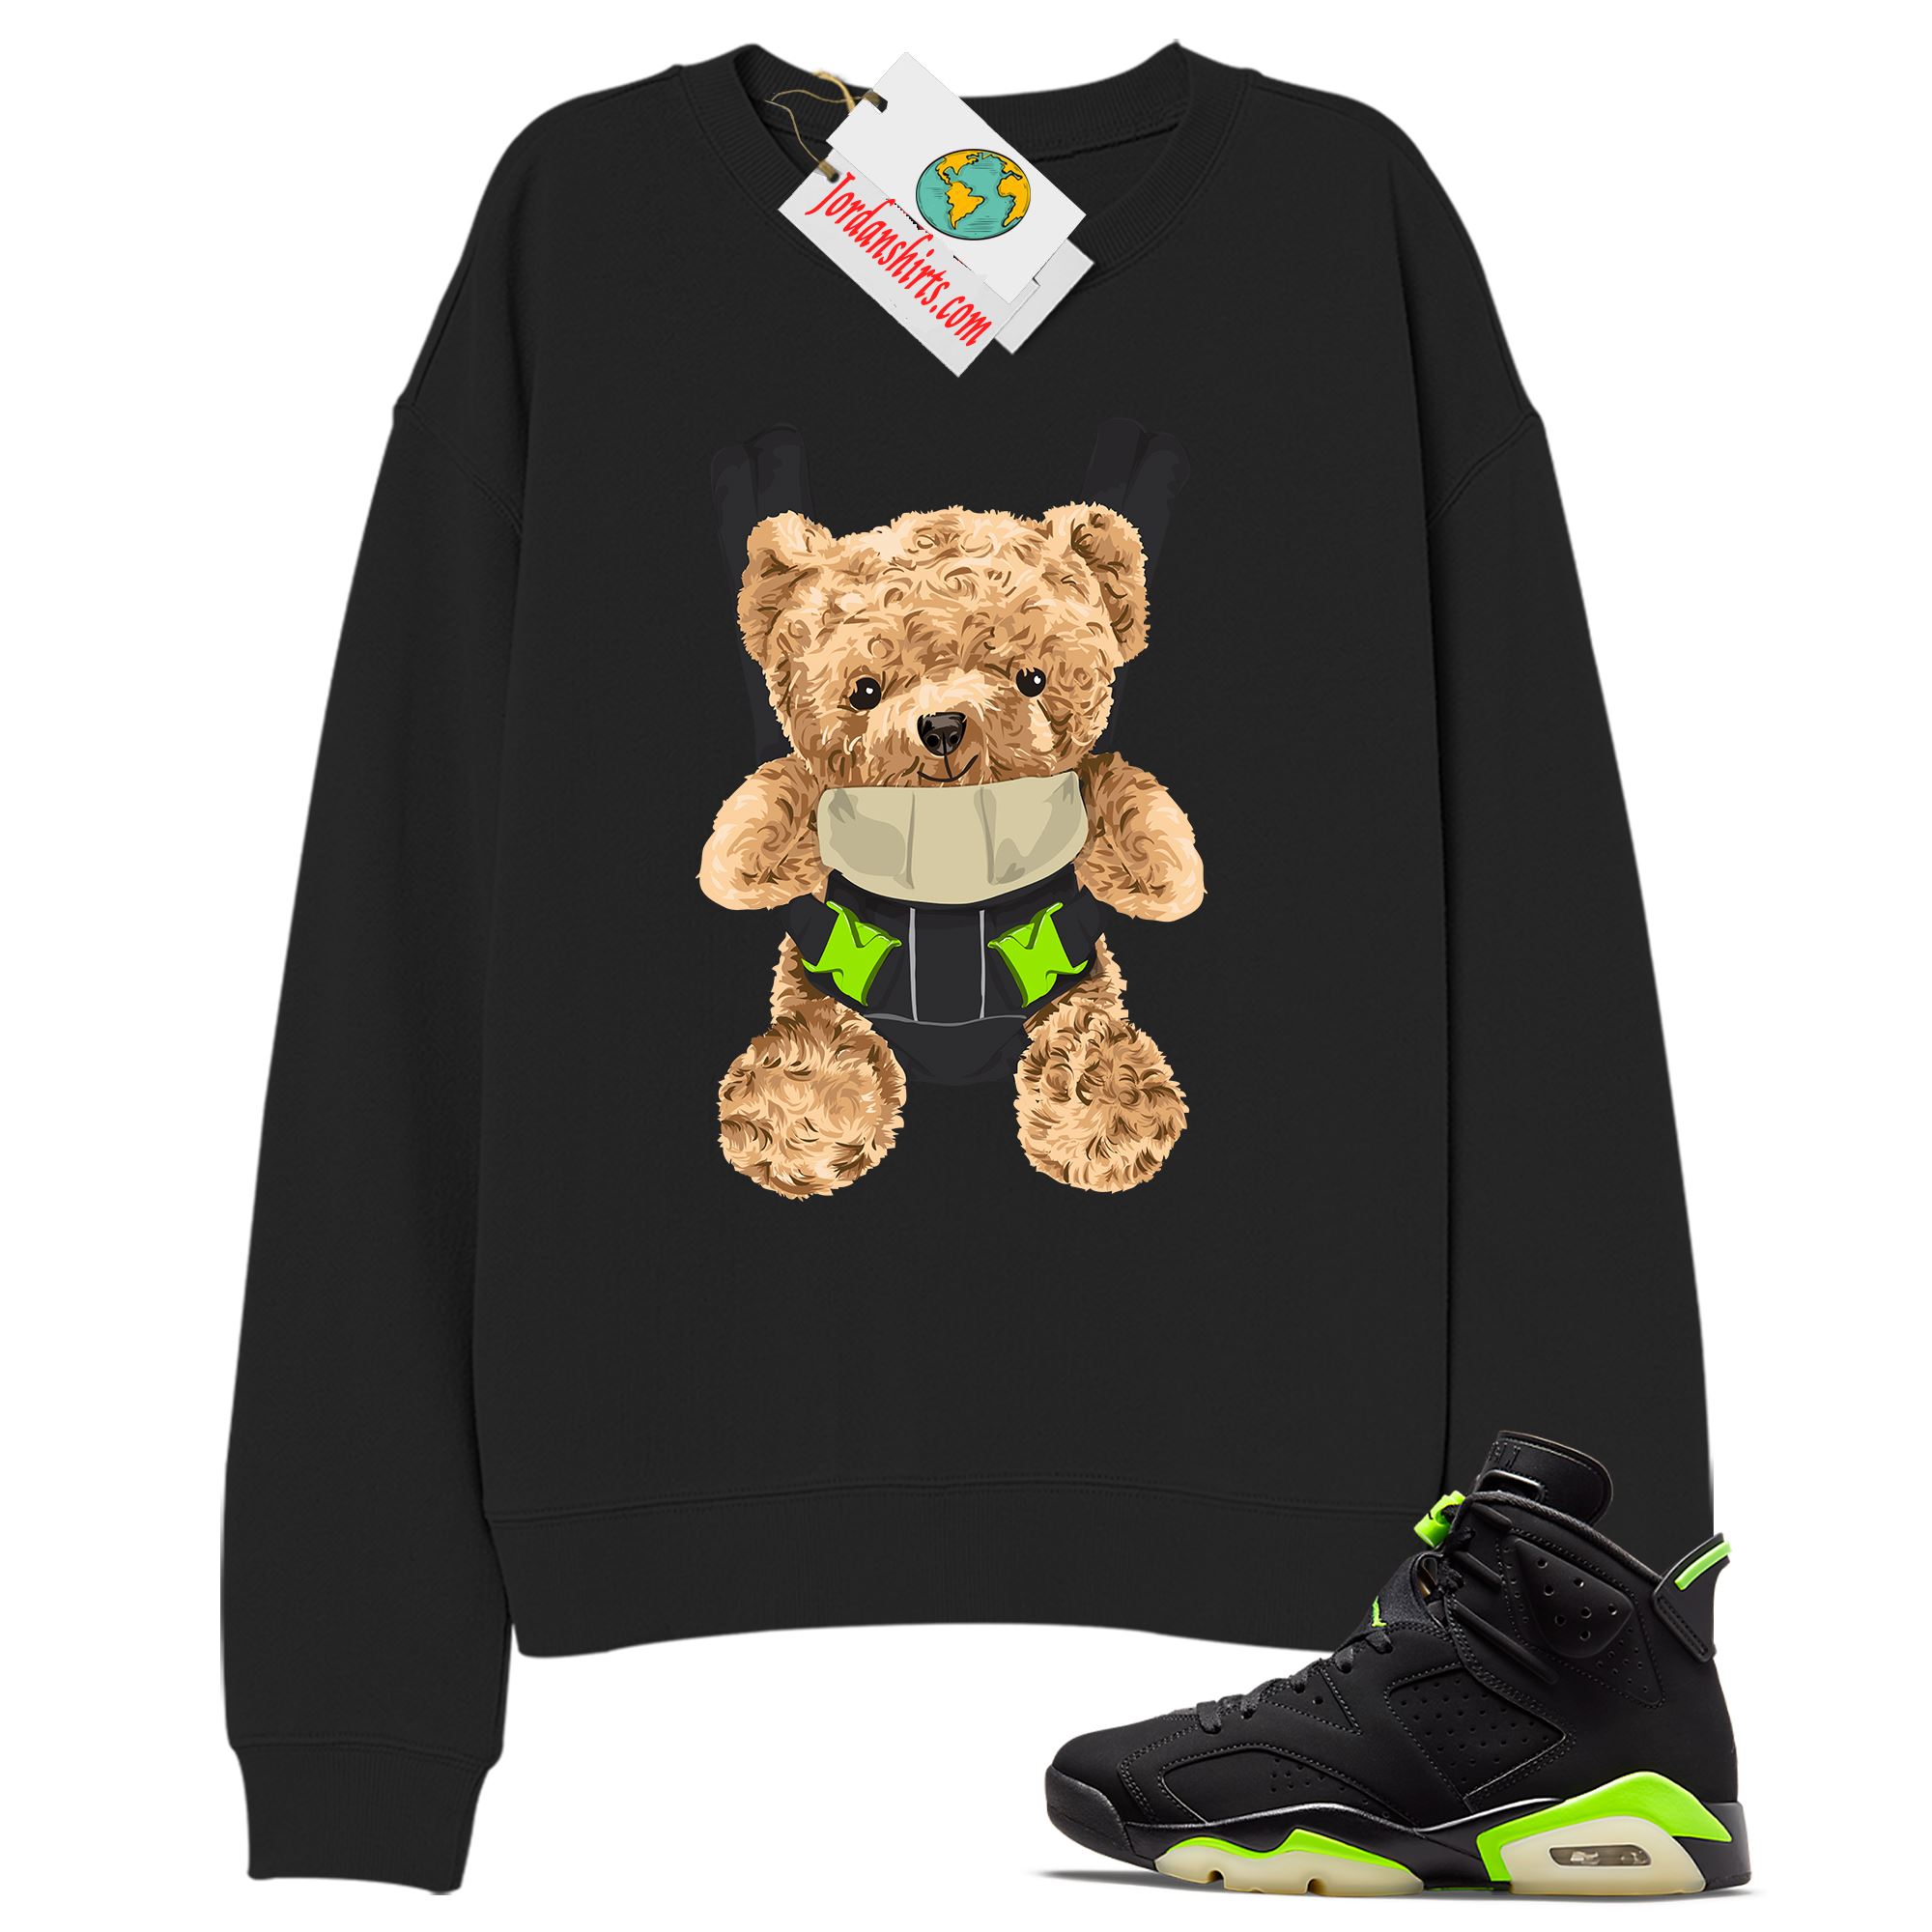 Jordan 6 Sweatshirt, Teddy Bear Bag Black Sweatshirt Air Jordan 6 Electric Green 6s Full Size Up To 5xl